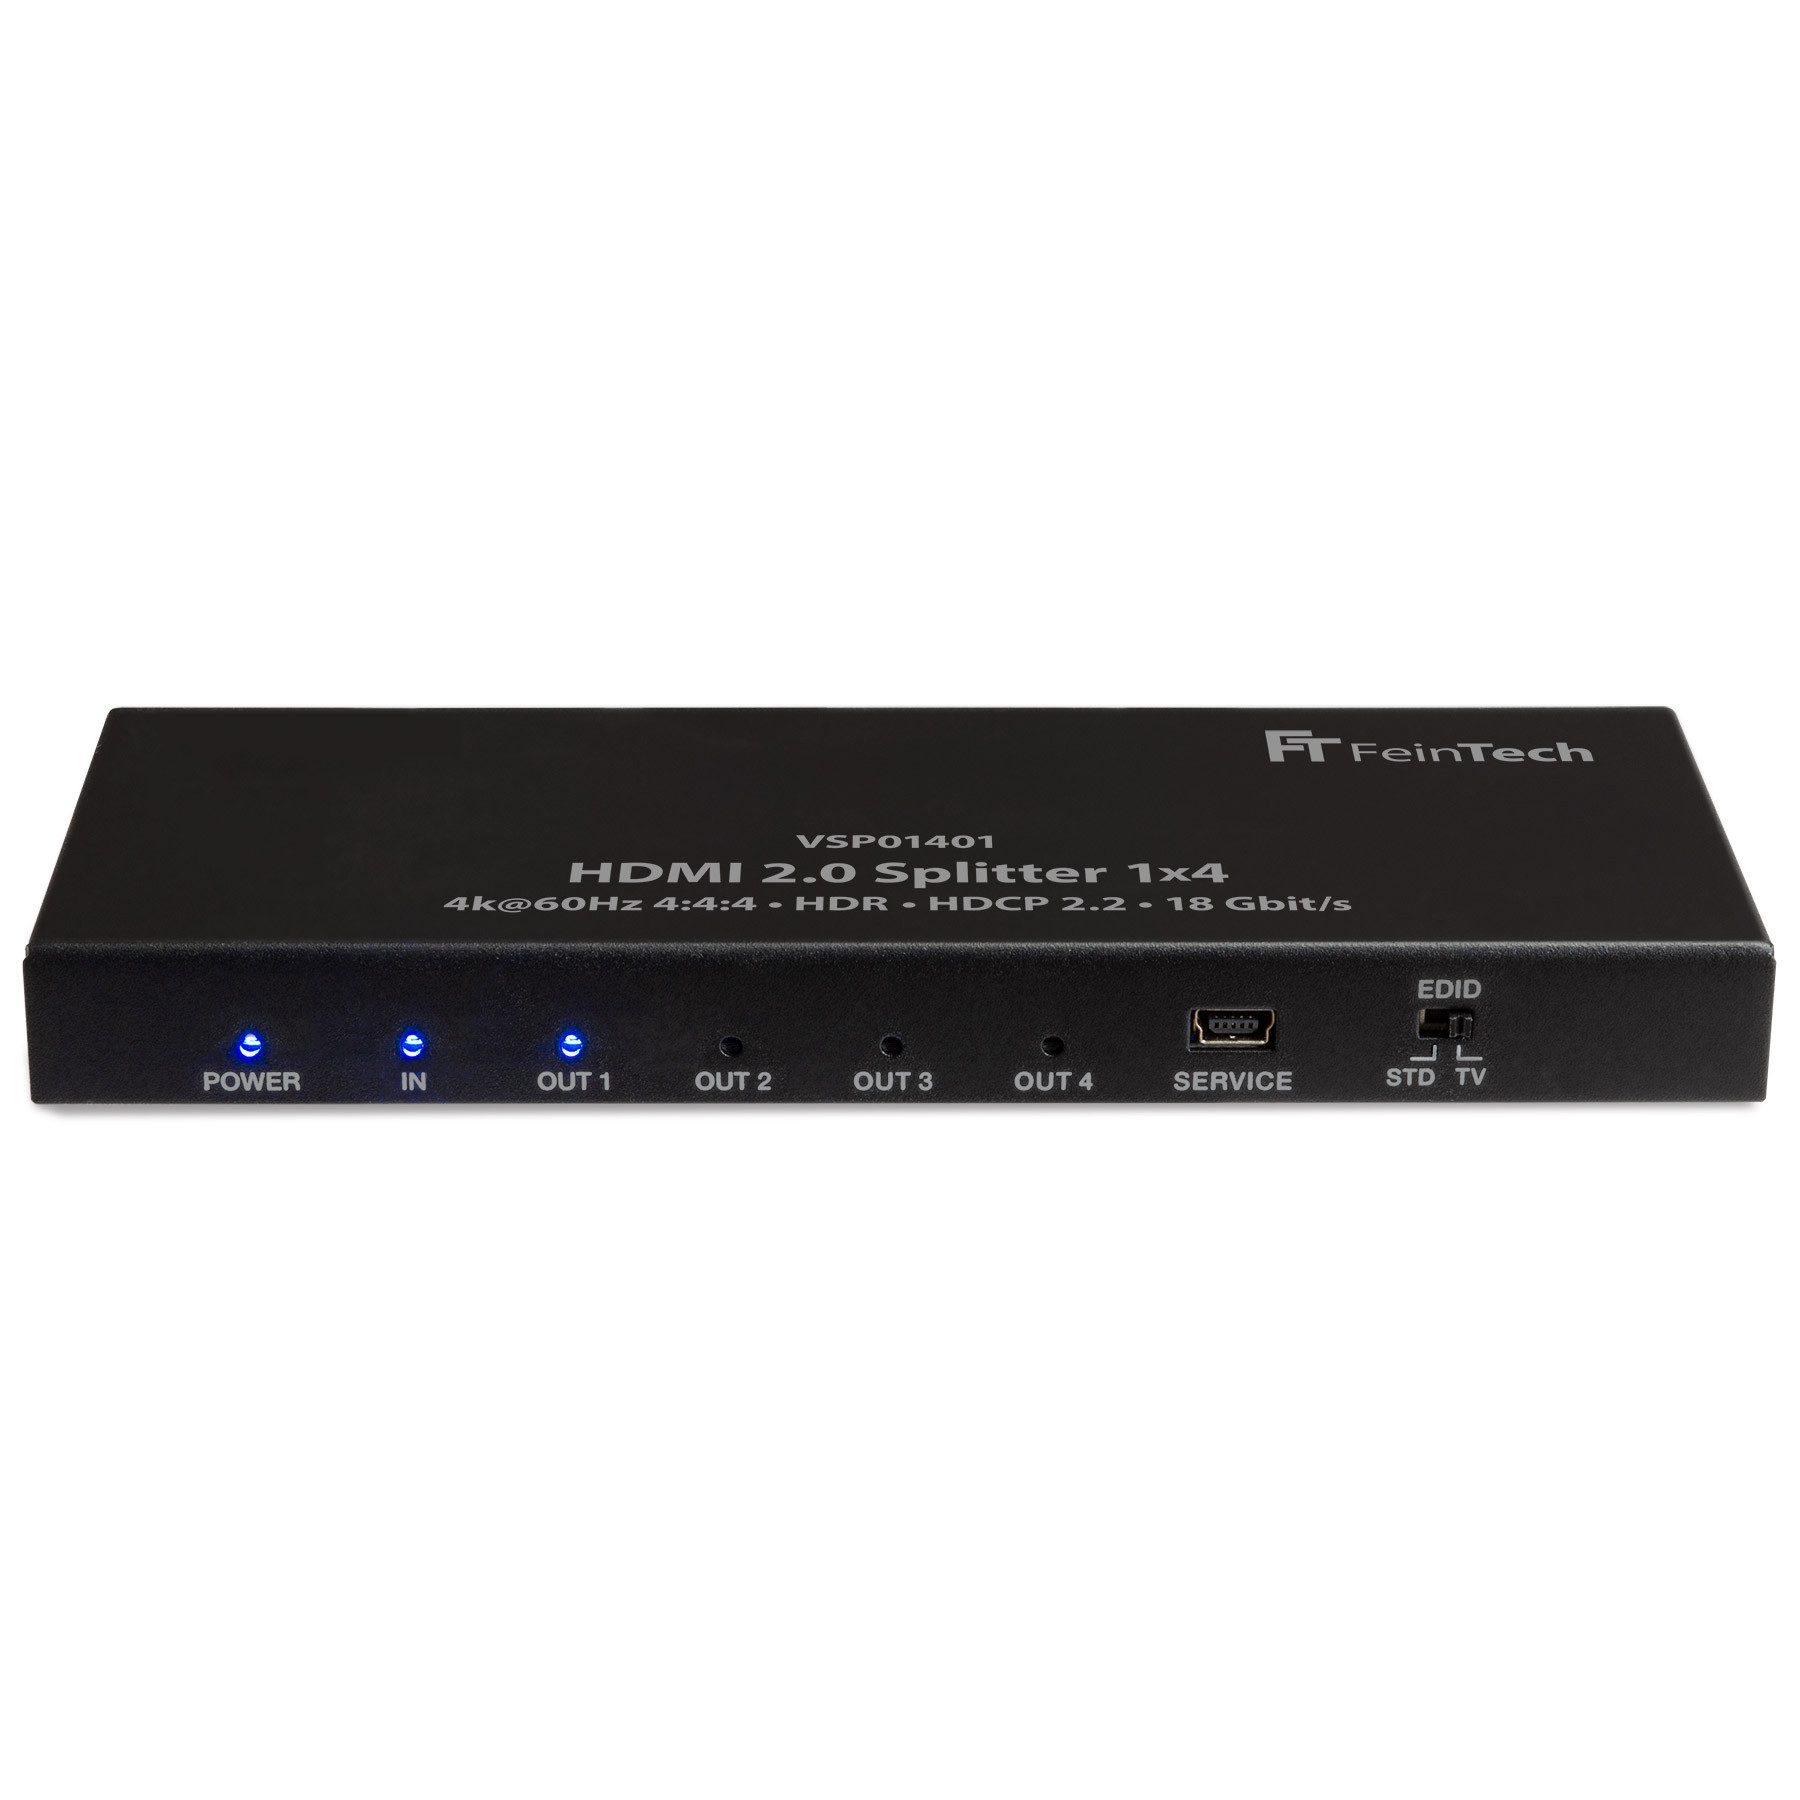 FeinTech HDMI-Splitter VSP01401 HDMI 2.0 Splitter 1x4, Downscaler, EDID-Management